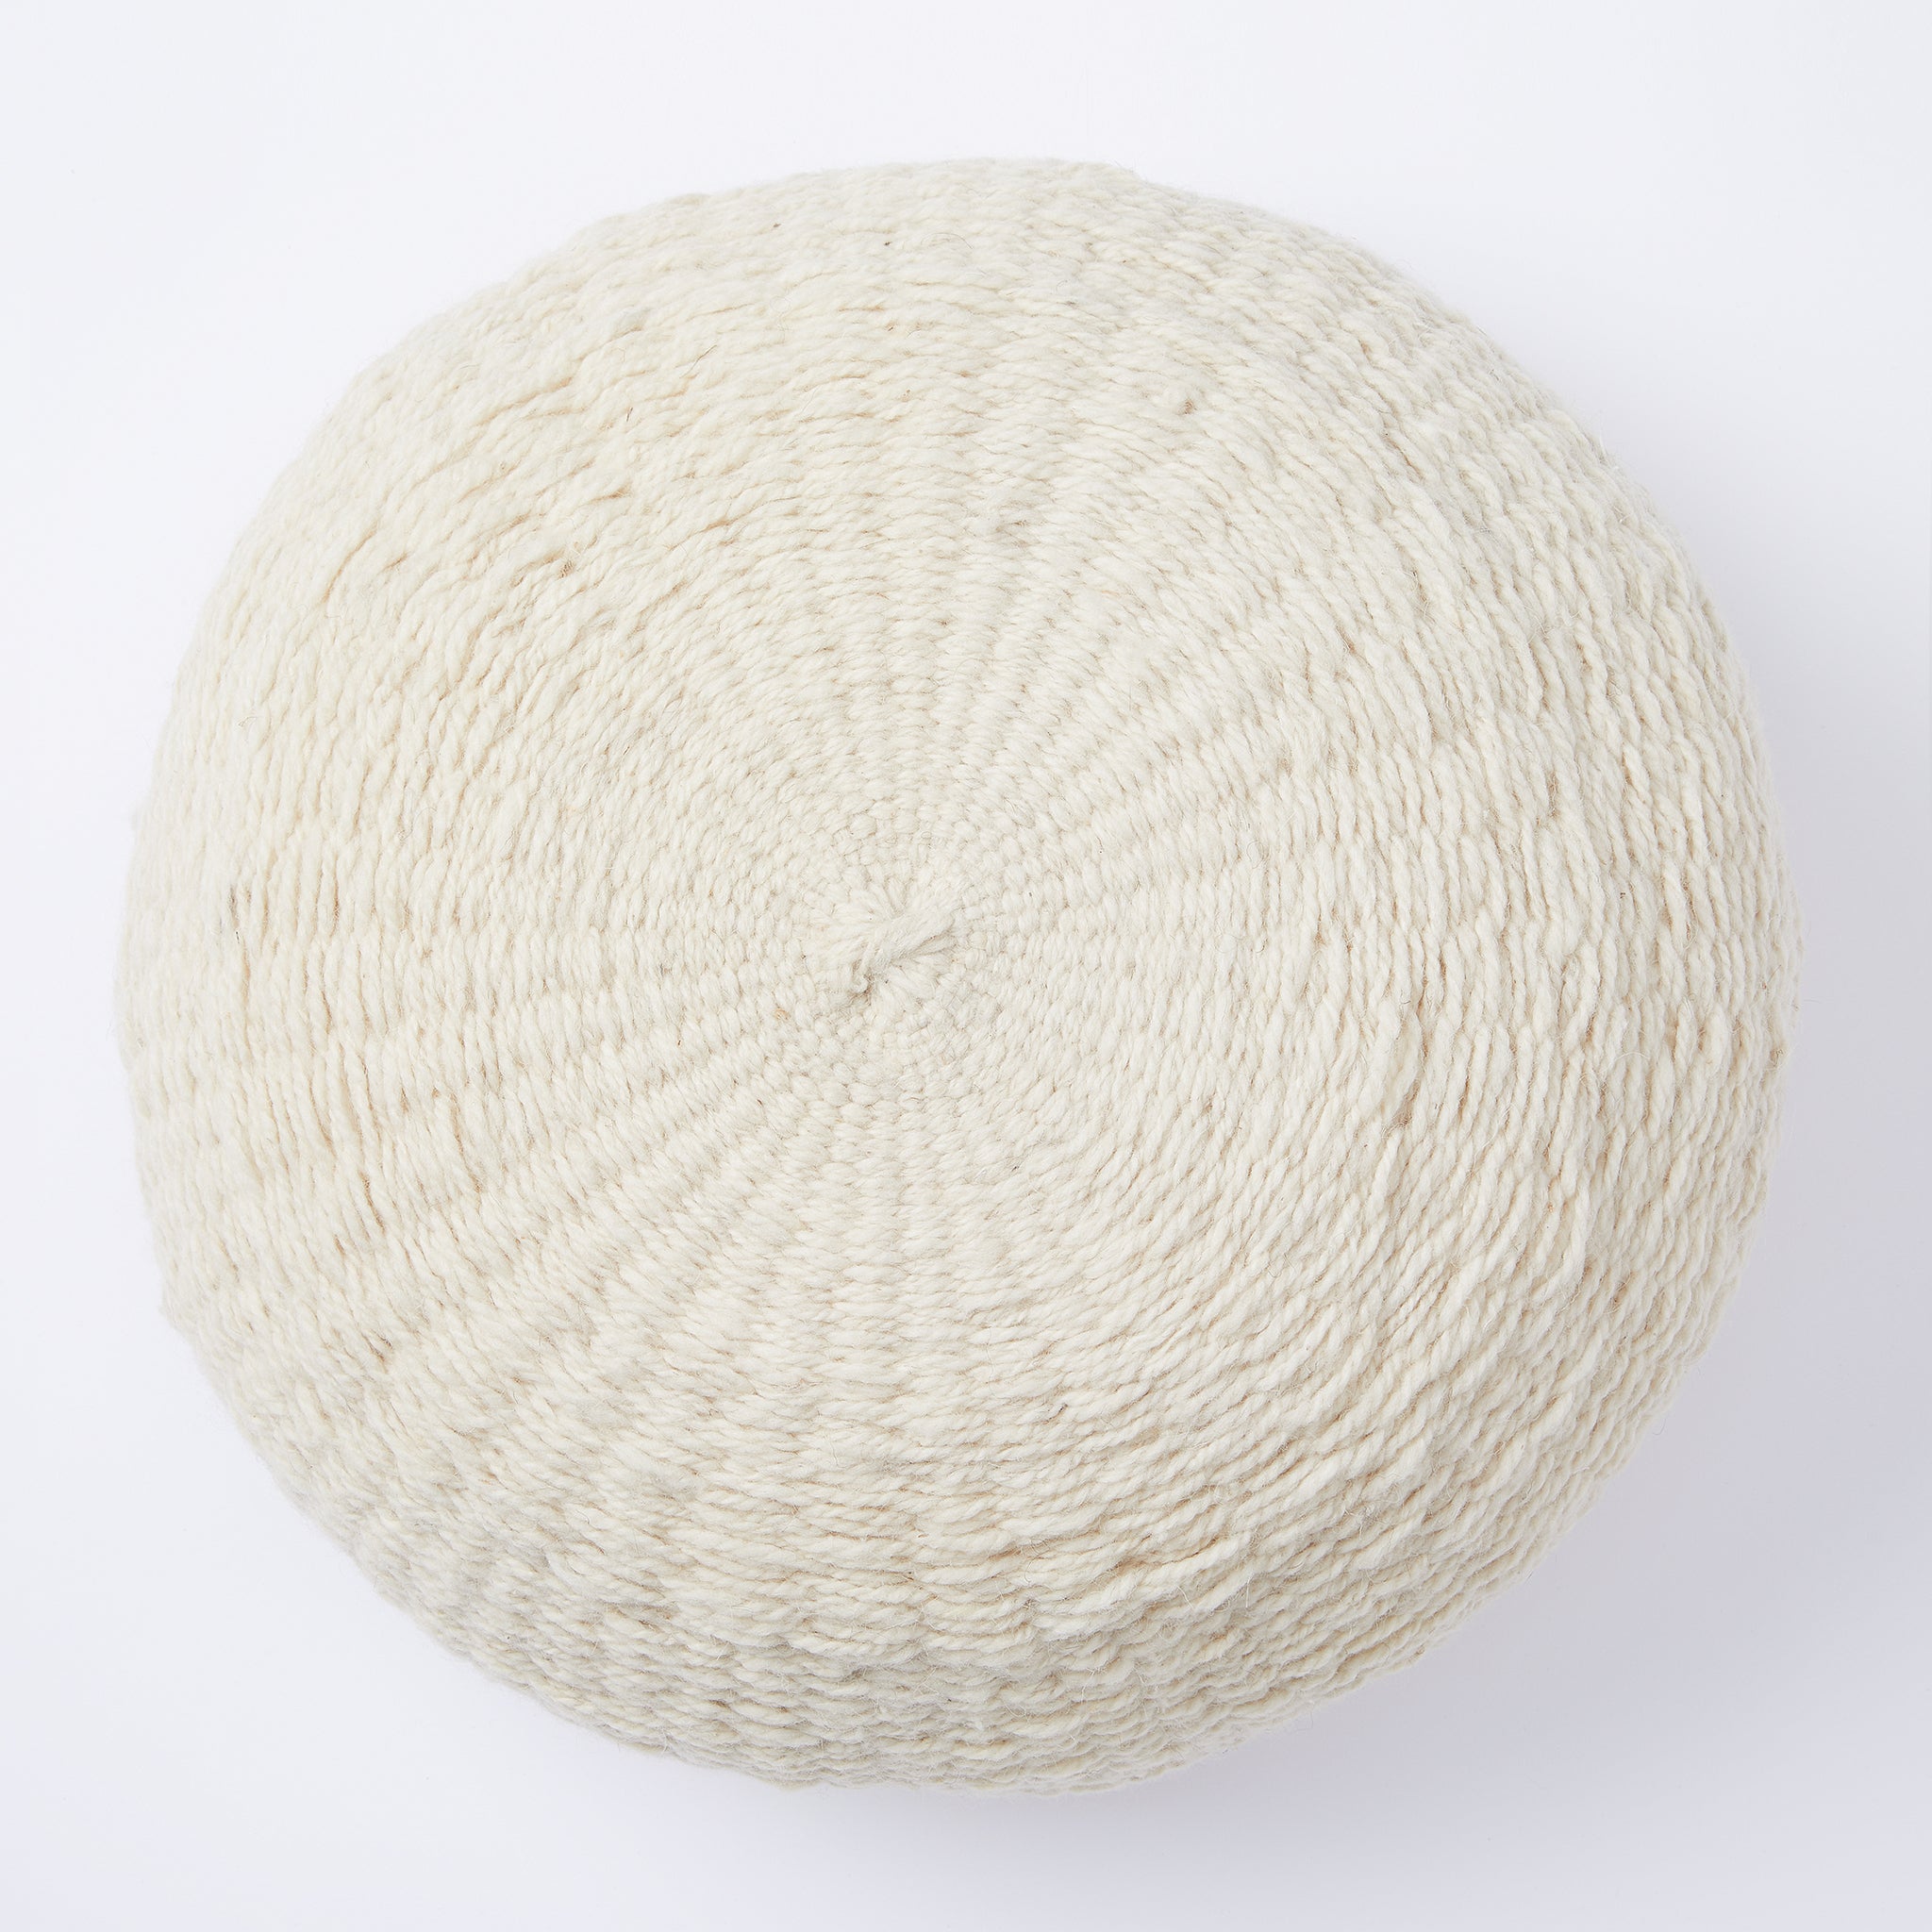 Hand-woven cushion "Salta" in natural white. 